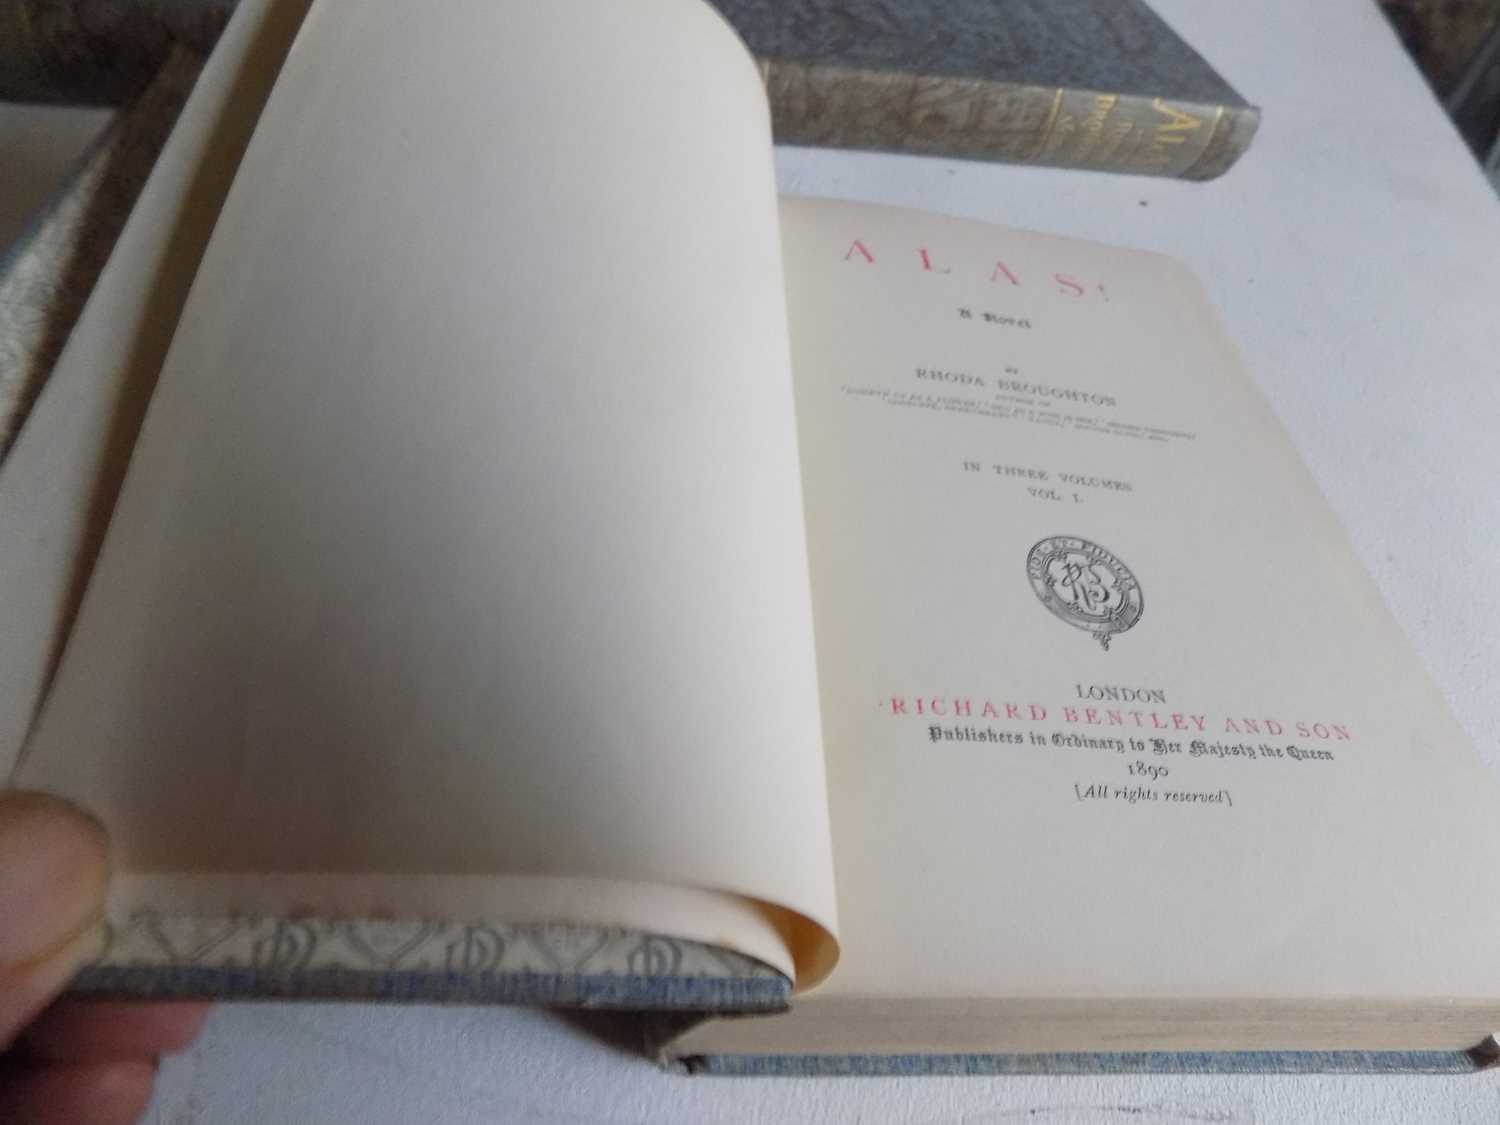 RHODA BROUGHTON. "Alas! A Novel." 3 Vols, 1st edn, orig floral cloth gt Richard Bentley & Son, - Image 2 of 2